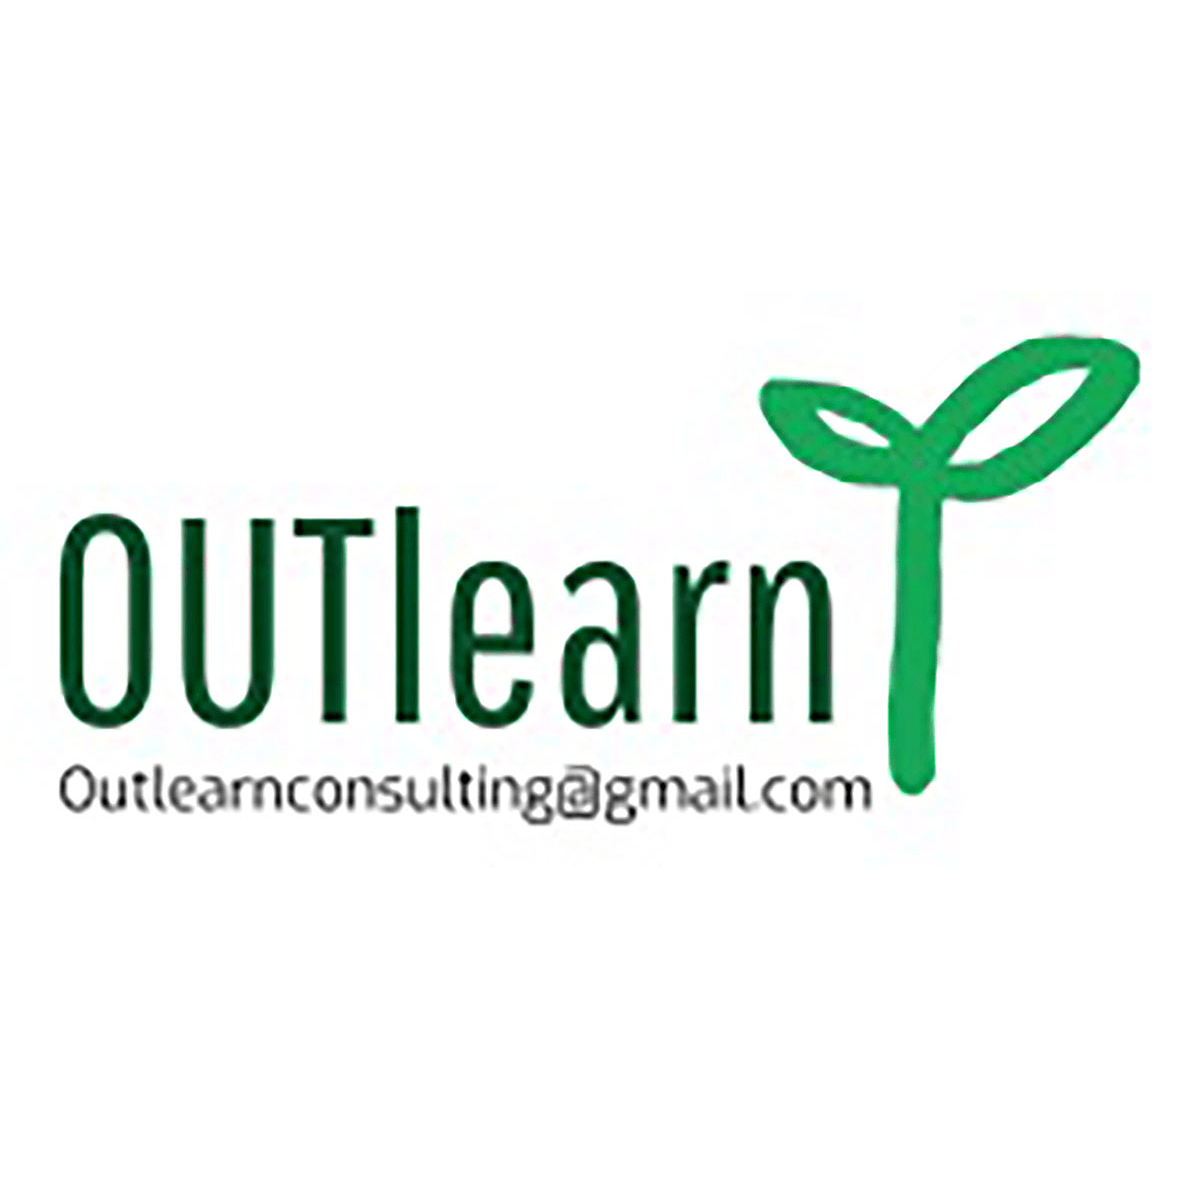 OutLearn logo_Rachel Danford_Resized.png